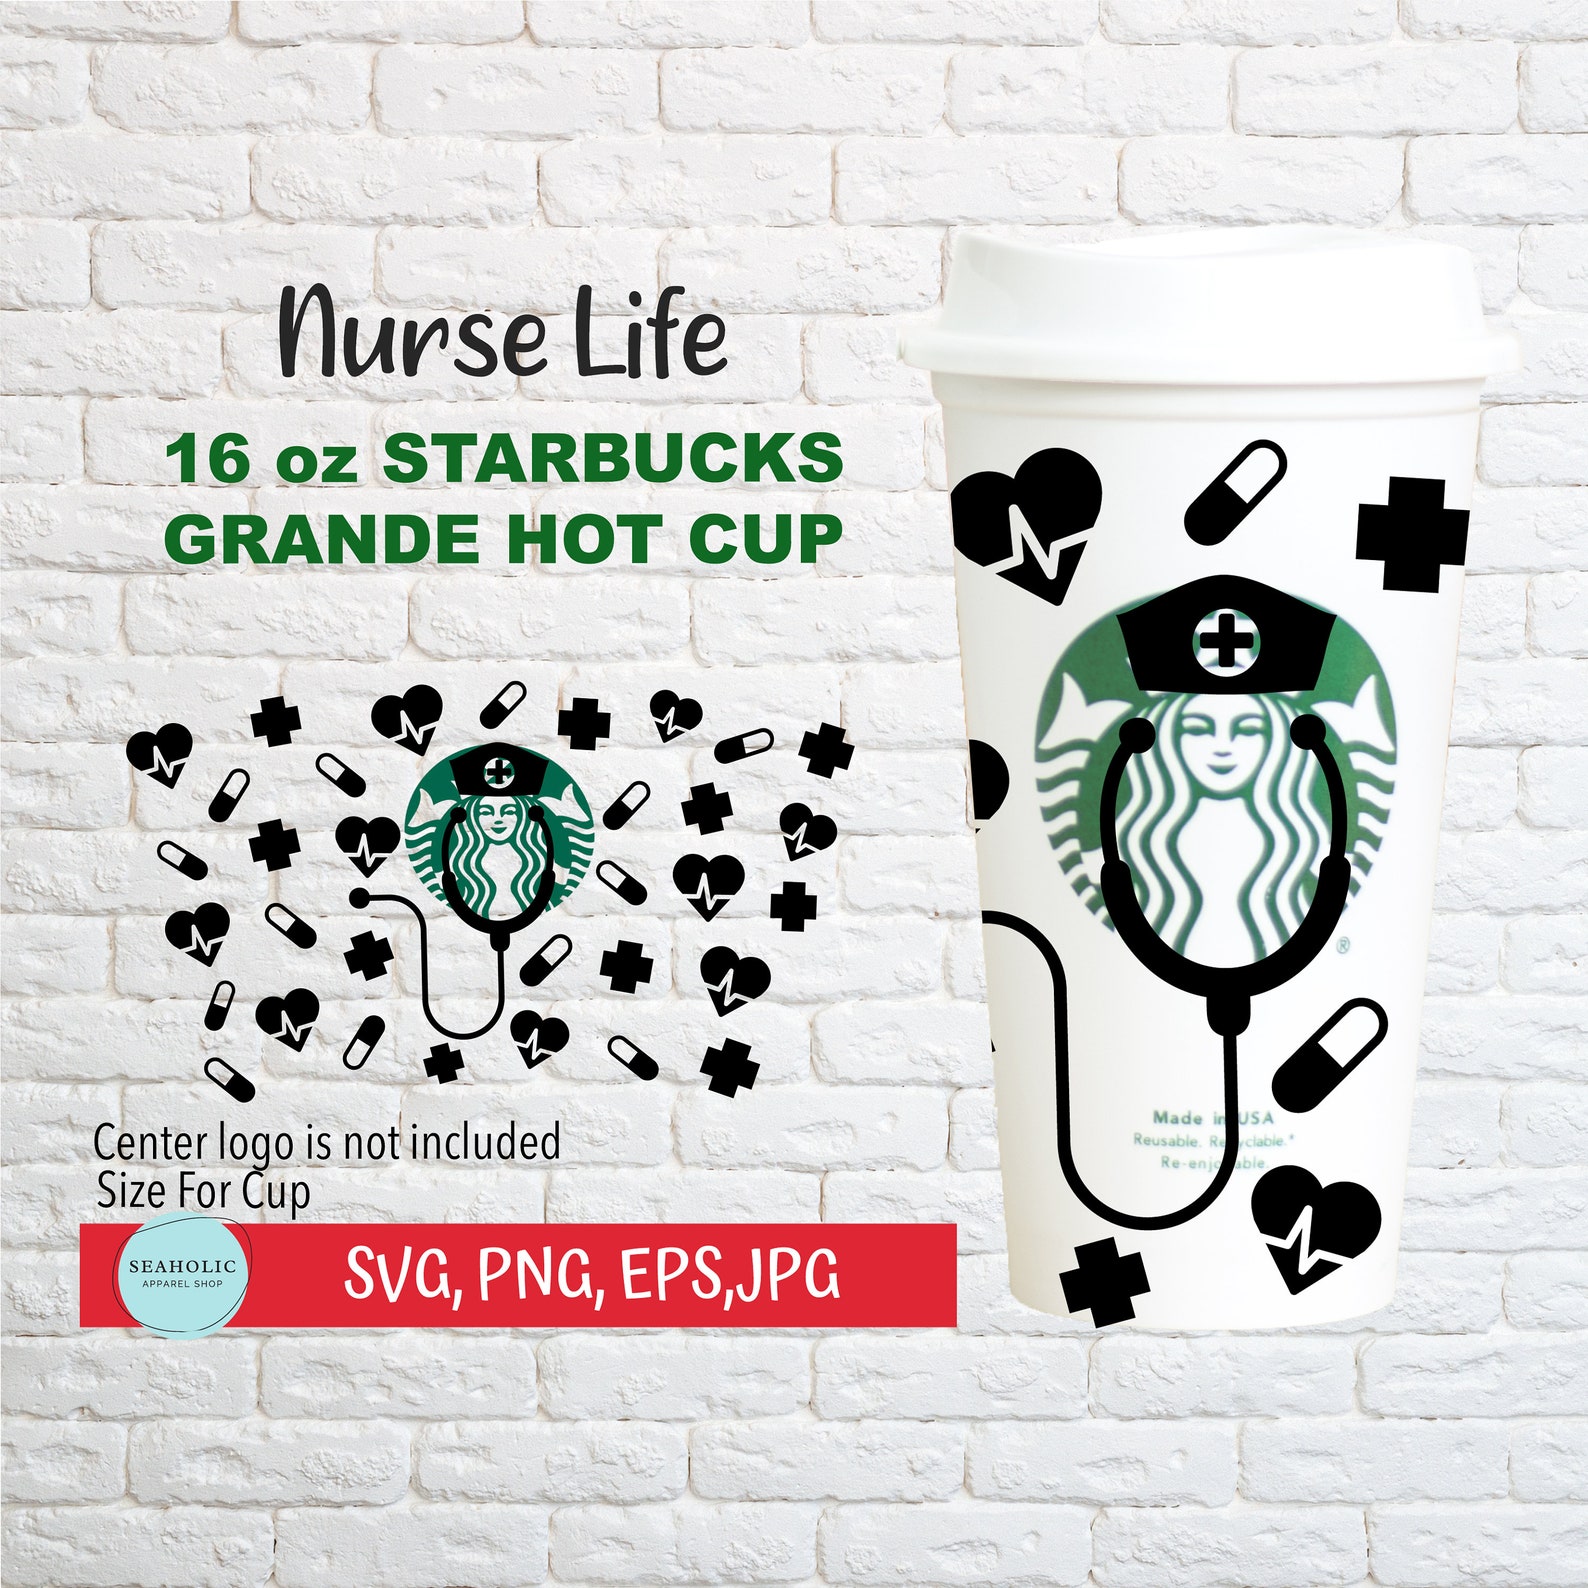 Nurse Life Starbucks SVG Nurse Starbucks Cup 16 Oz Nurse Etsy